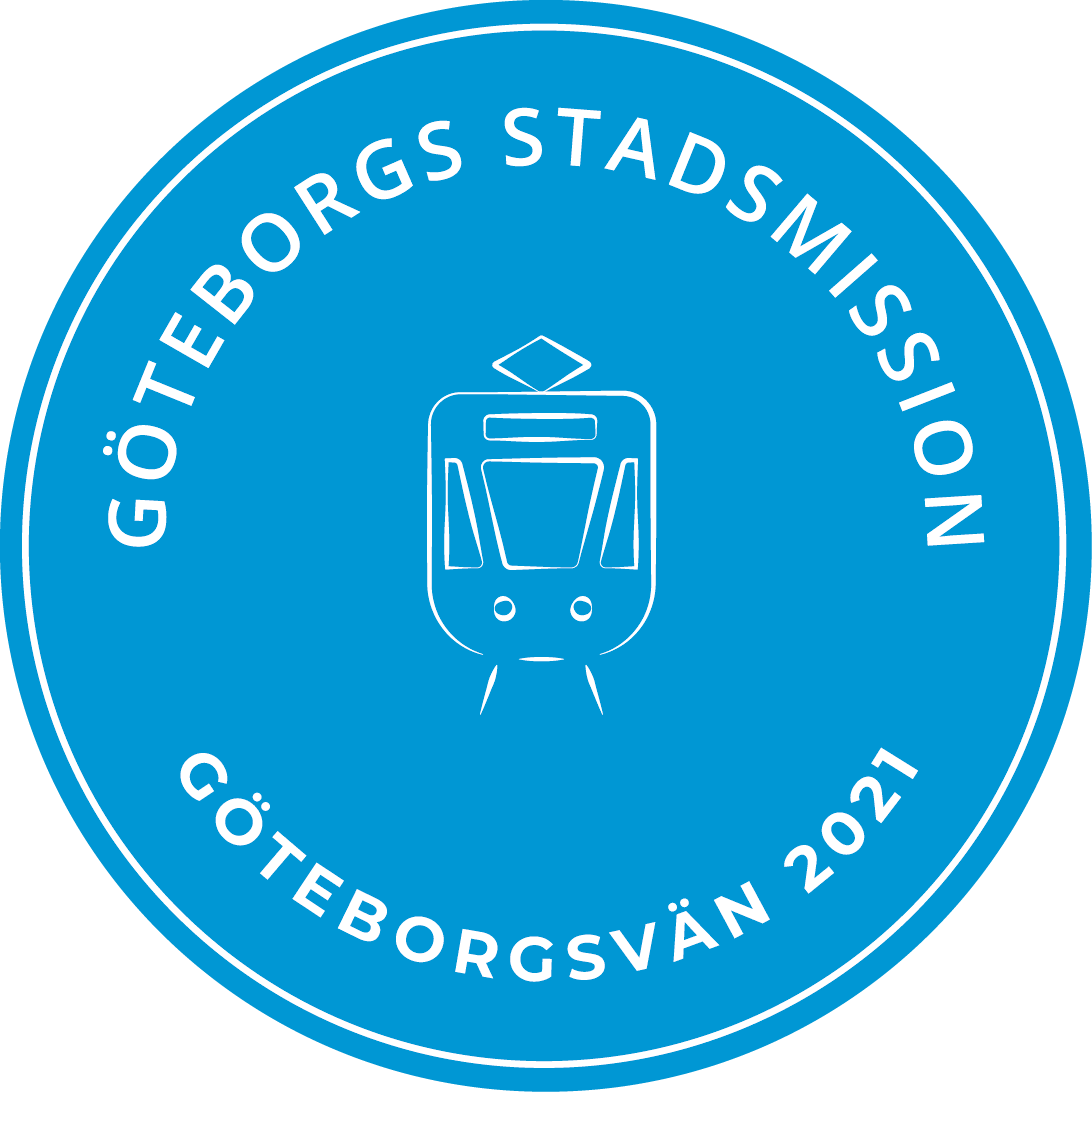 Goteborgsvan_Liten_2021_CMYK